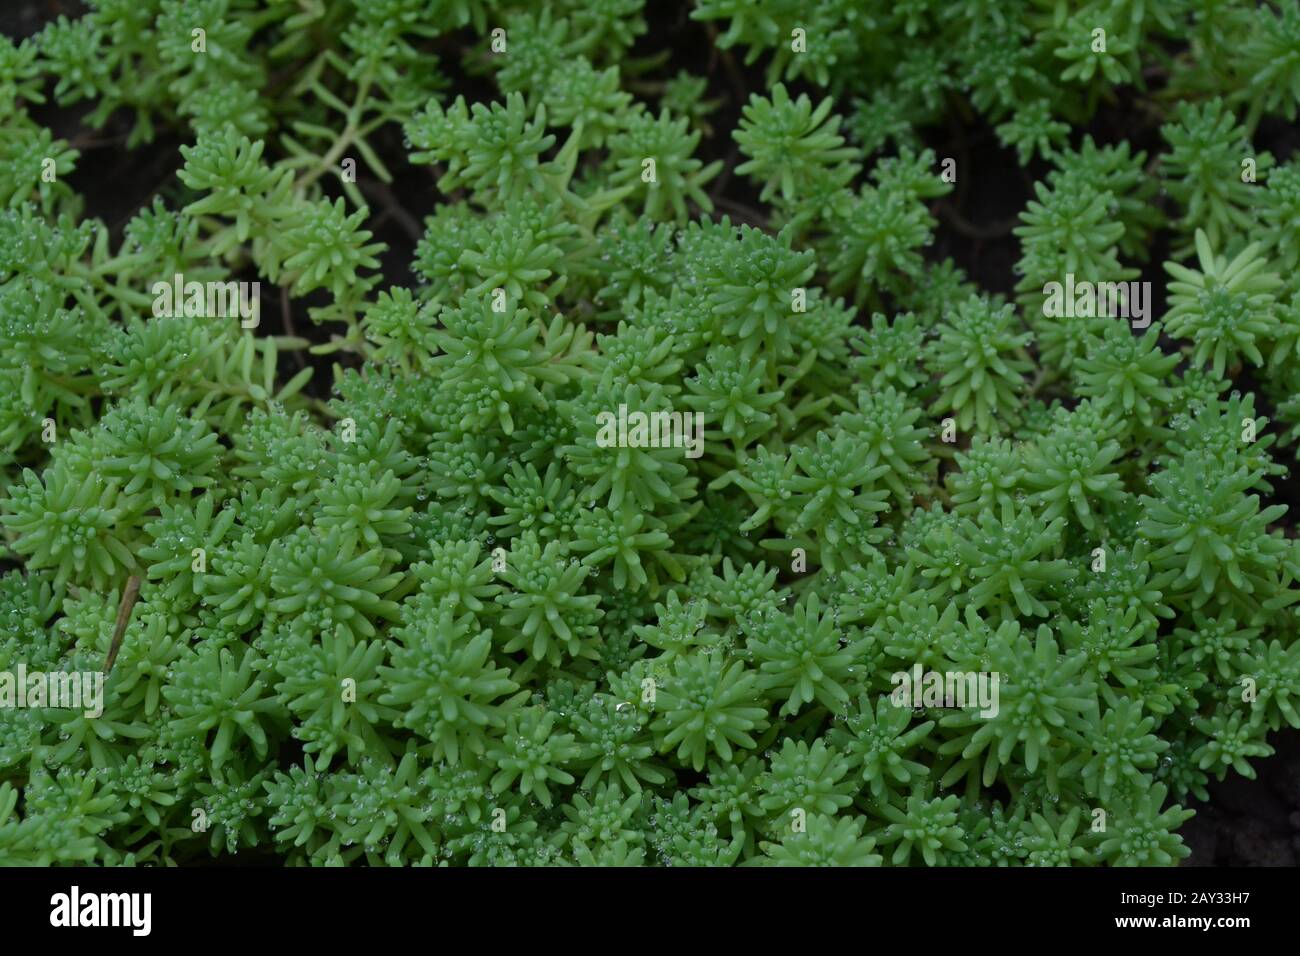 Stonecrop. Hare cabbage. Sedum. Green moss. Decorative grassy carpet. Flowerbed. Ornamental garden plants. Horizontal photo Stock Photo